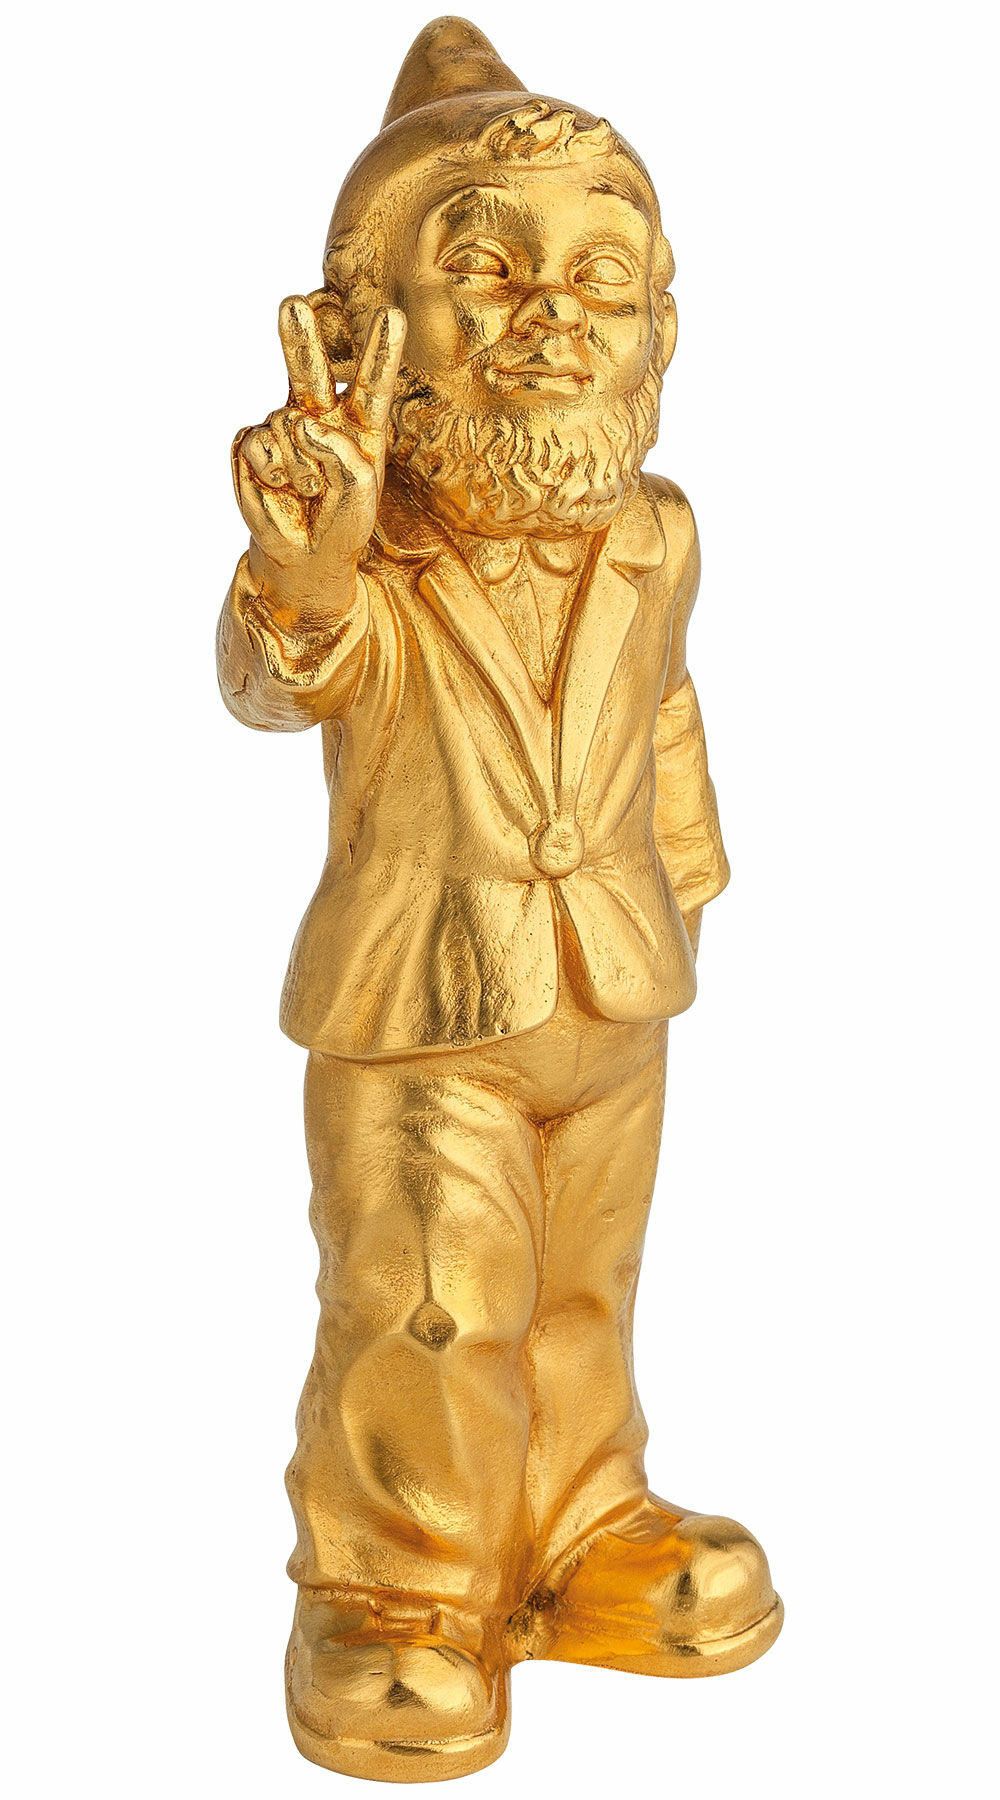 Skulptur "Victory", guldbelagt version von Ottmar Hörl